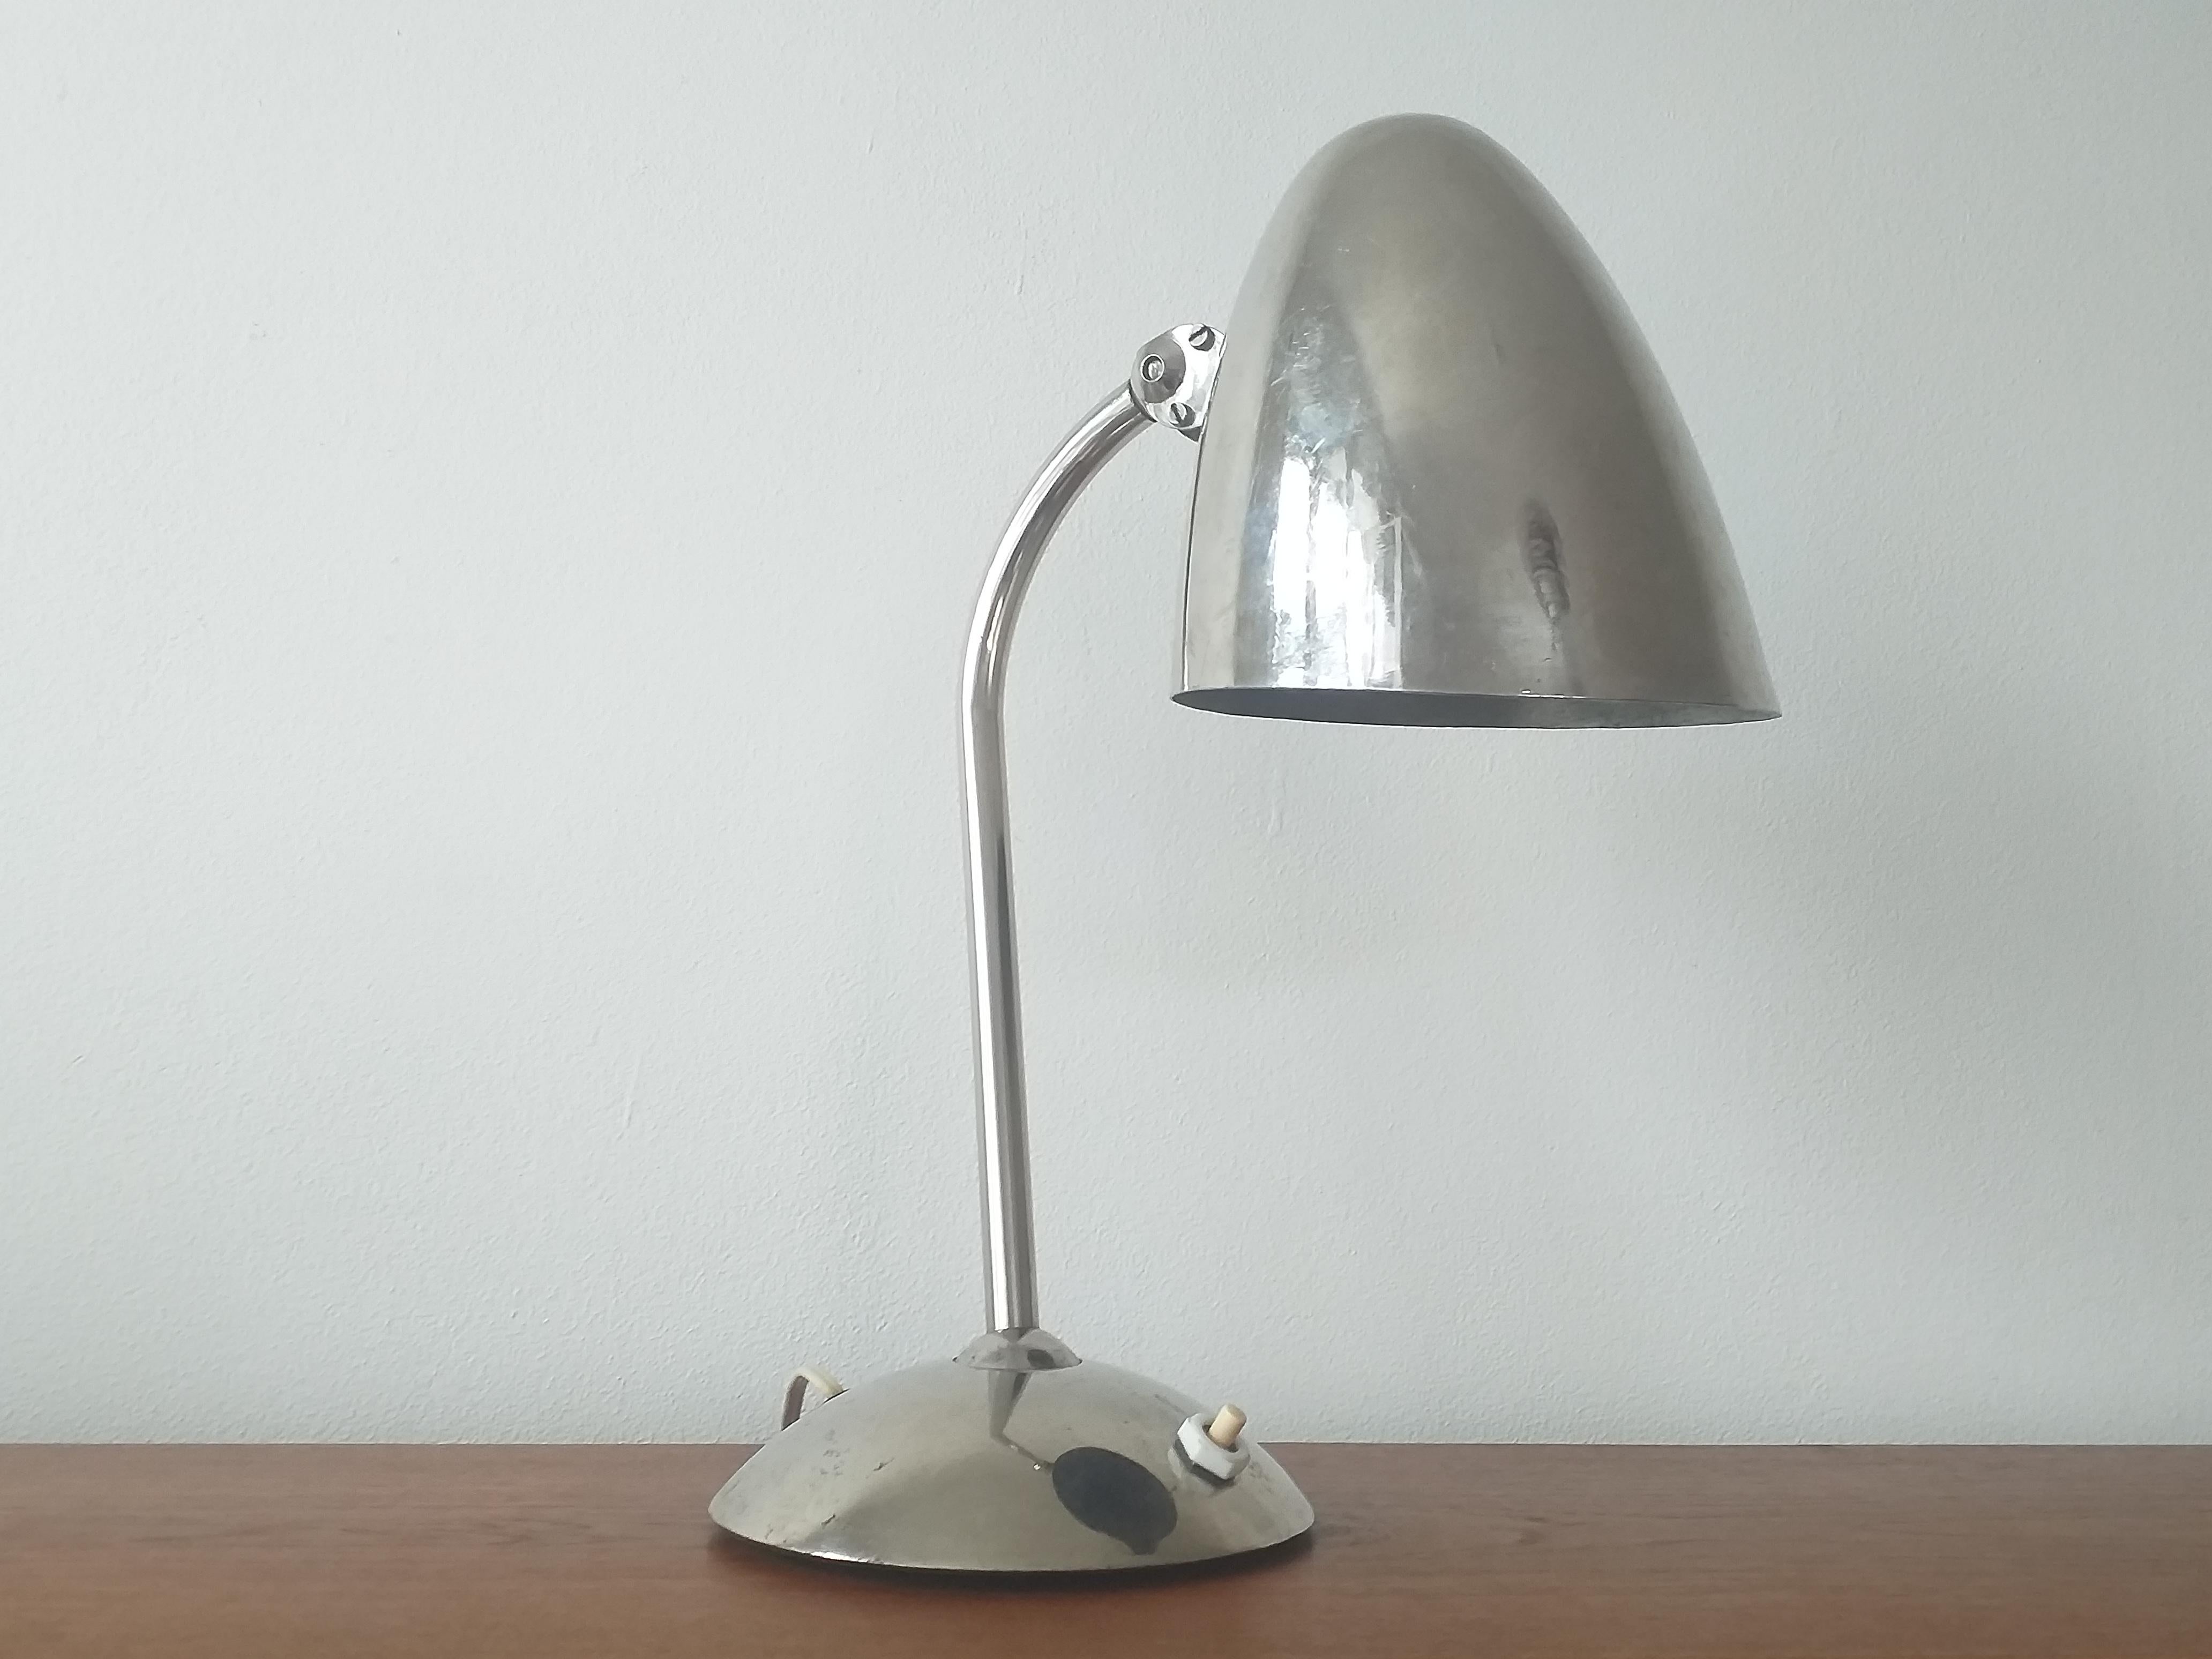 Art Deco, Functionalism, Bauhaus Table Lamp, Franta Anyz, 1930s 2